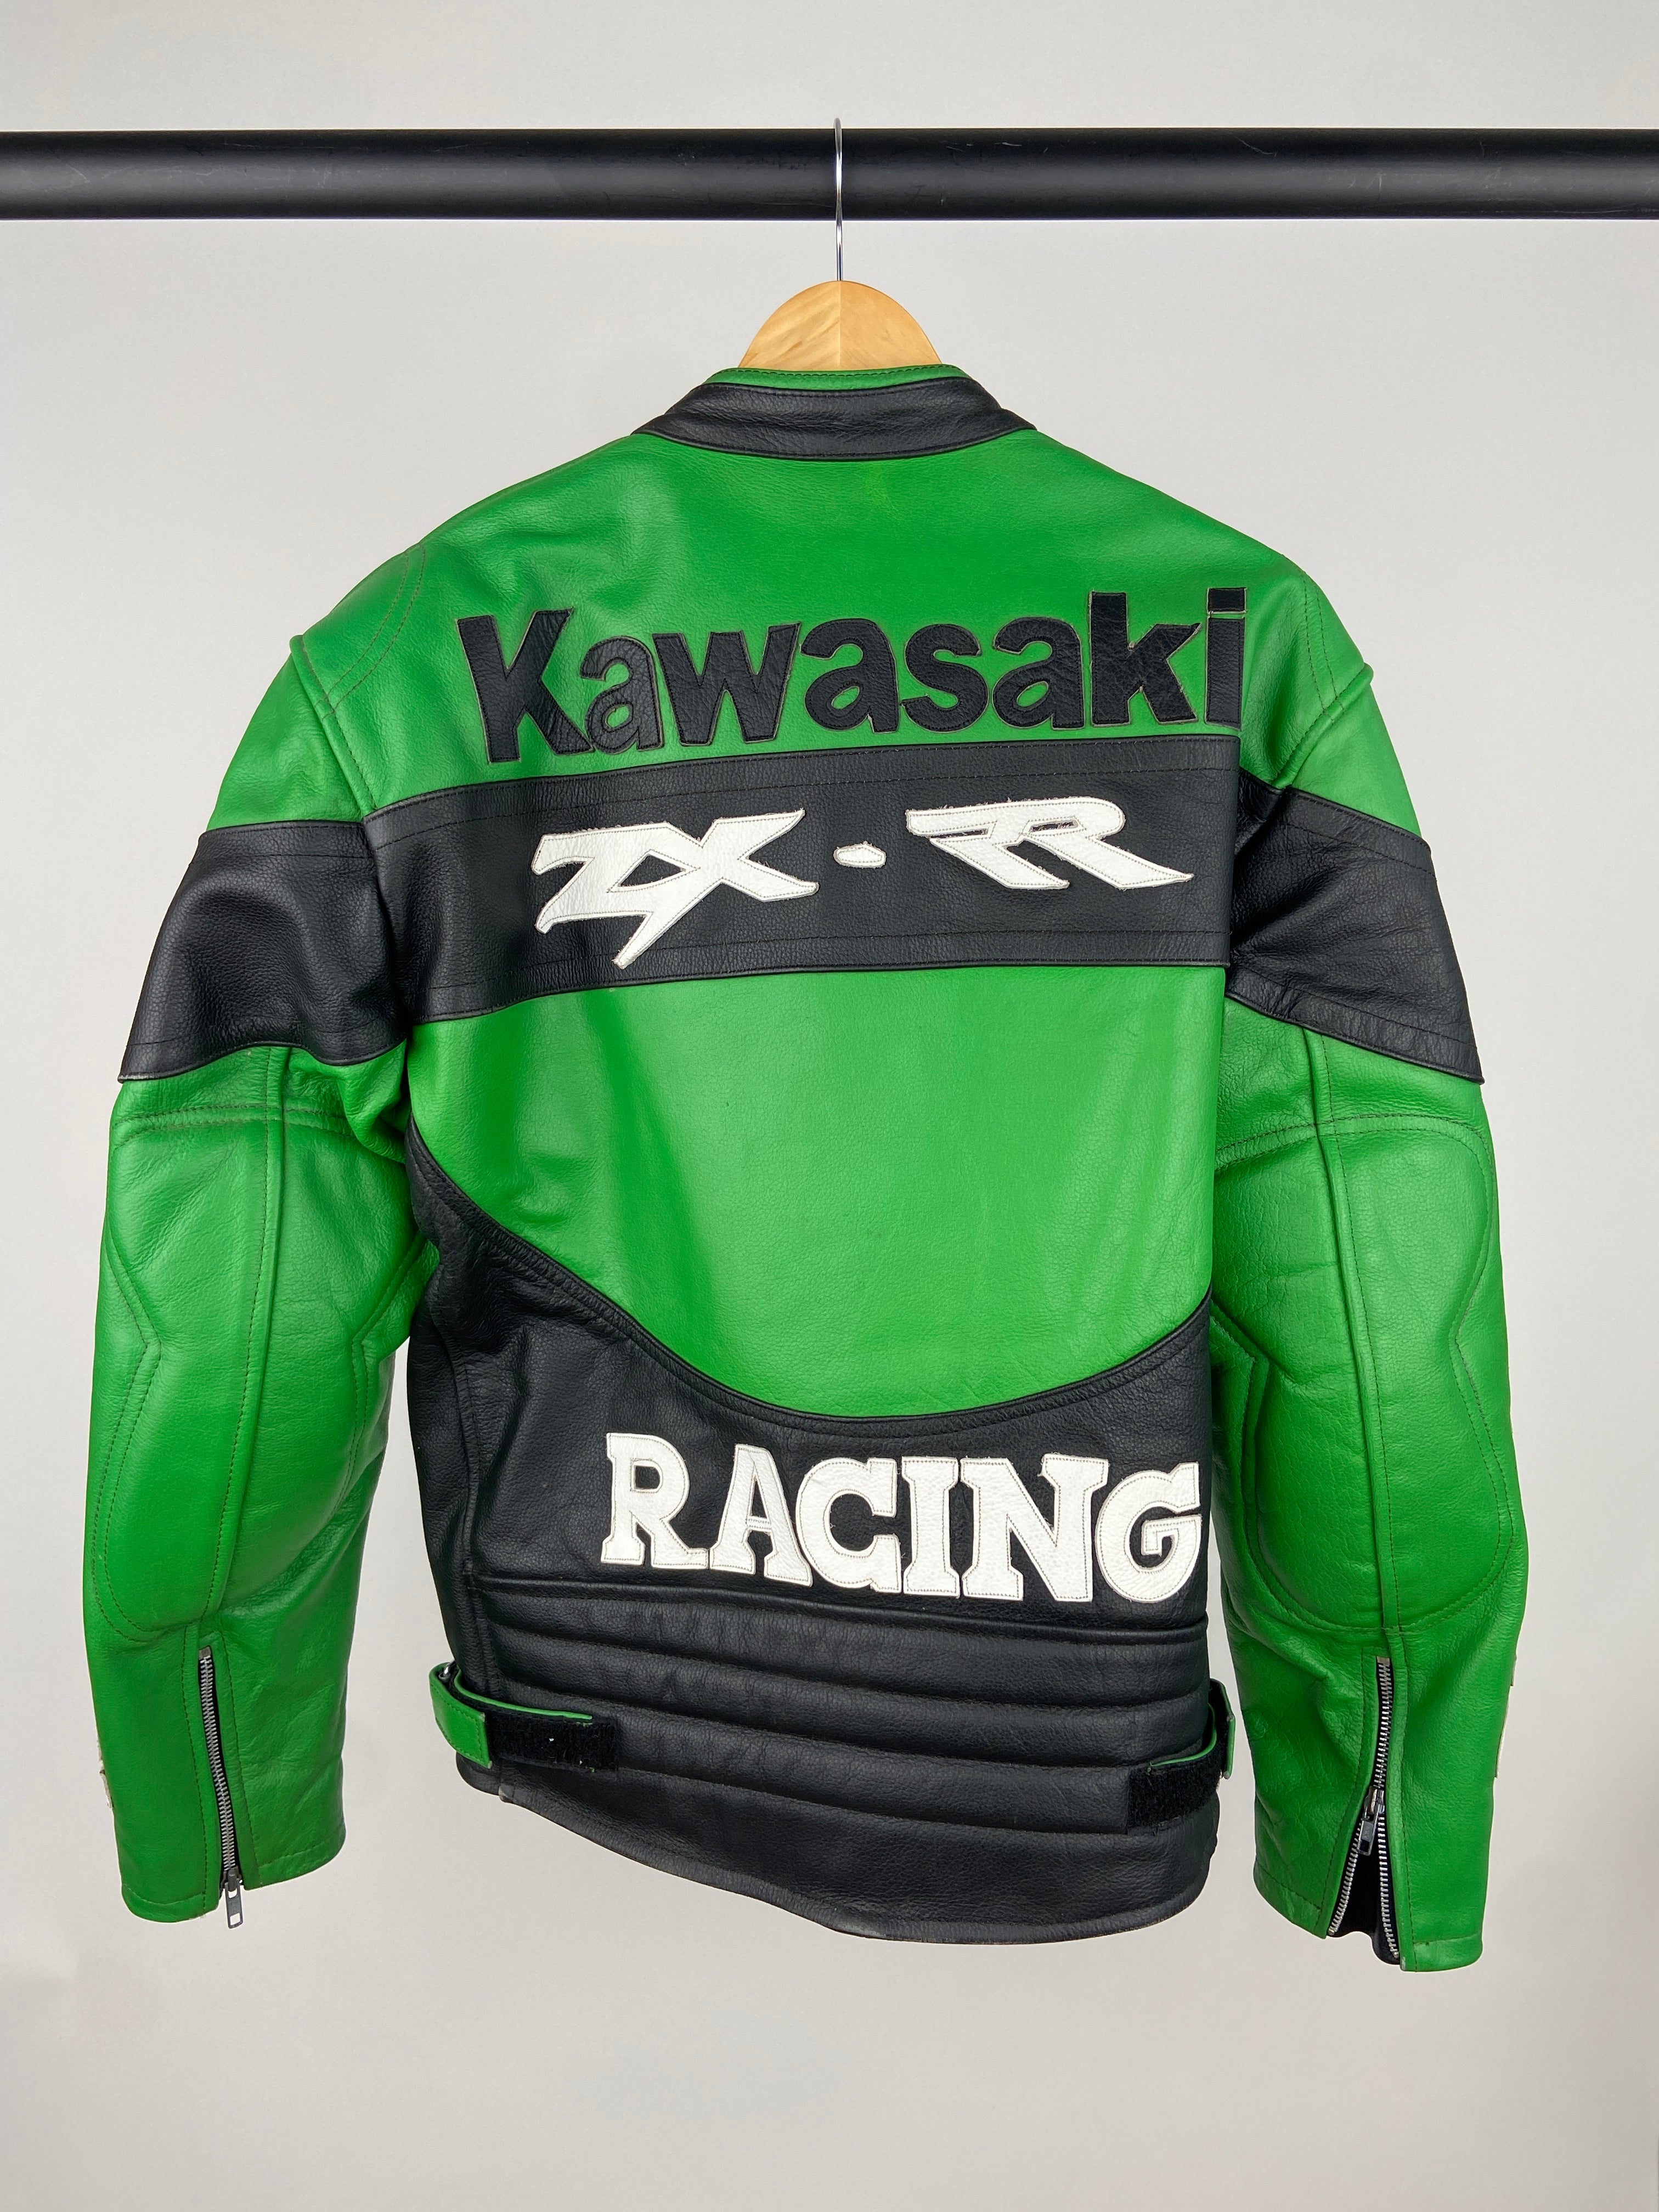 Kawasaki Z Motorbike Racing Leather jacket Video Review Hot selling Motorcycle  Jacket - YouTube